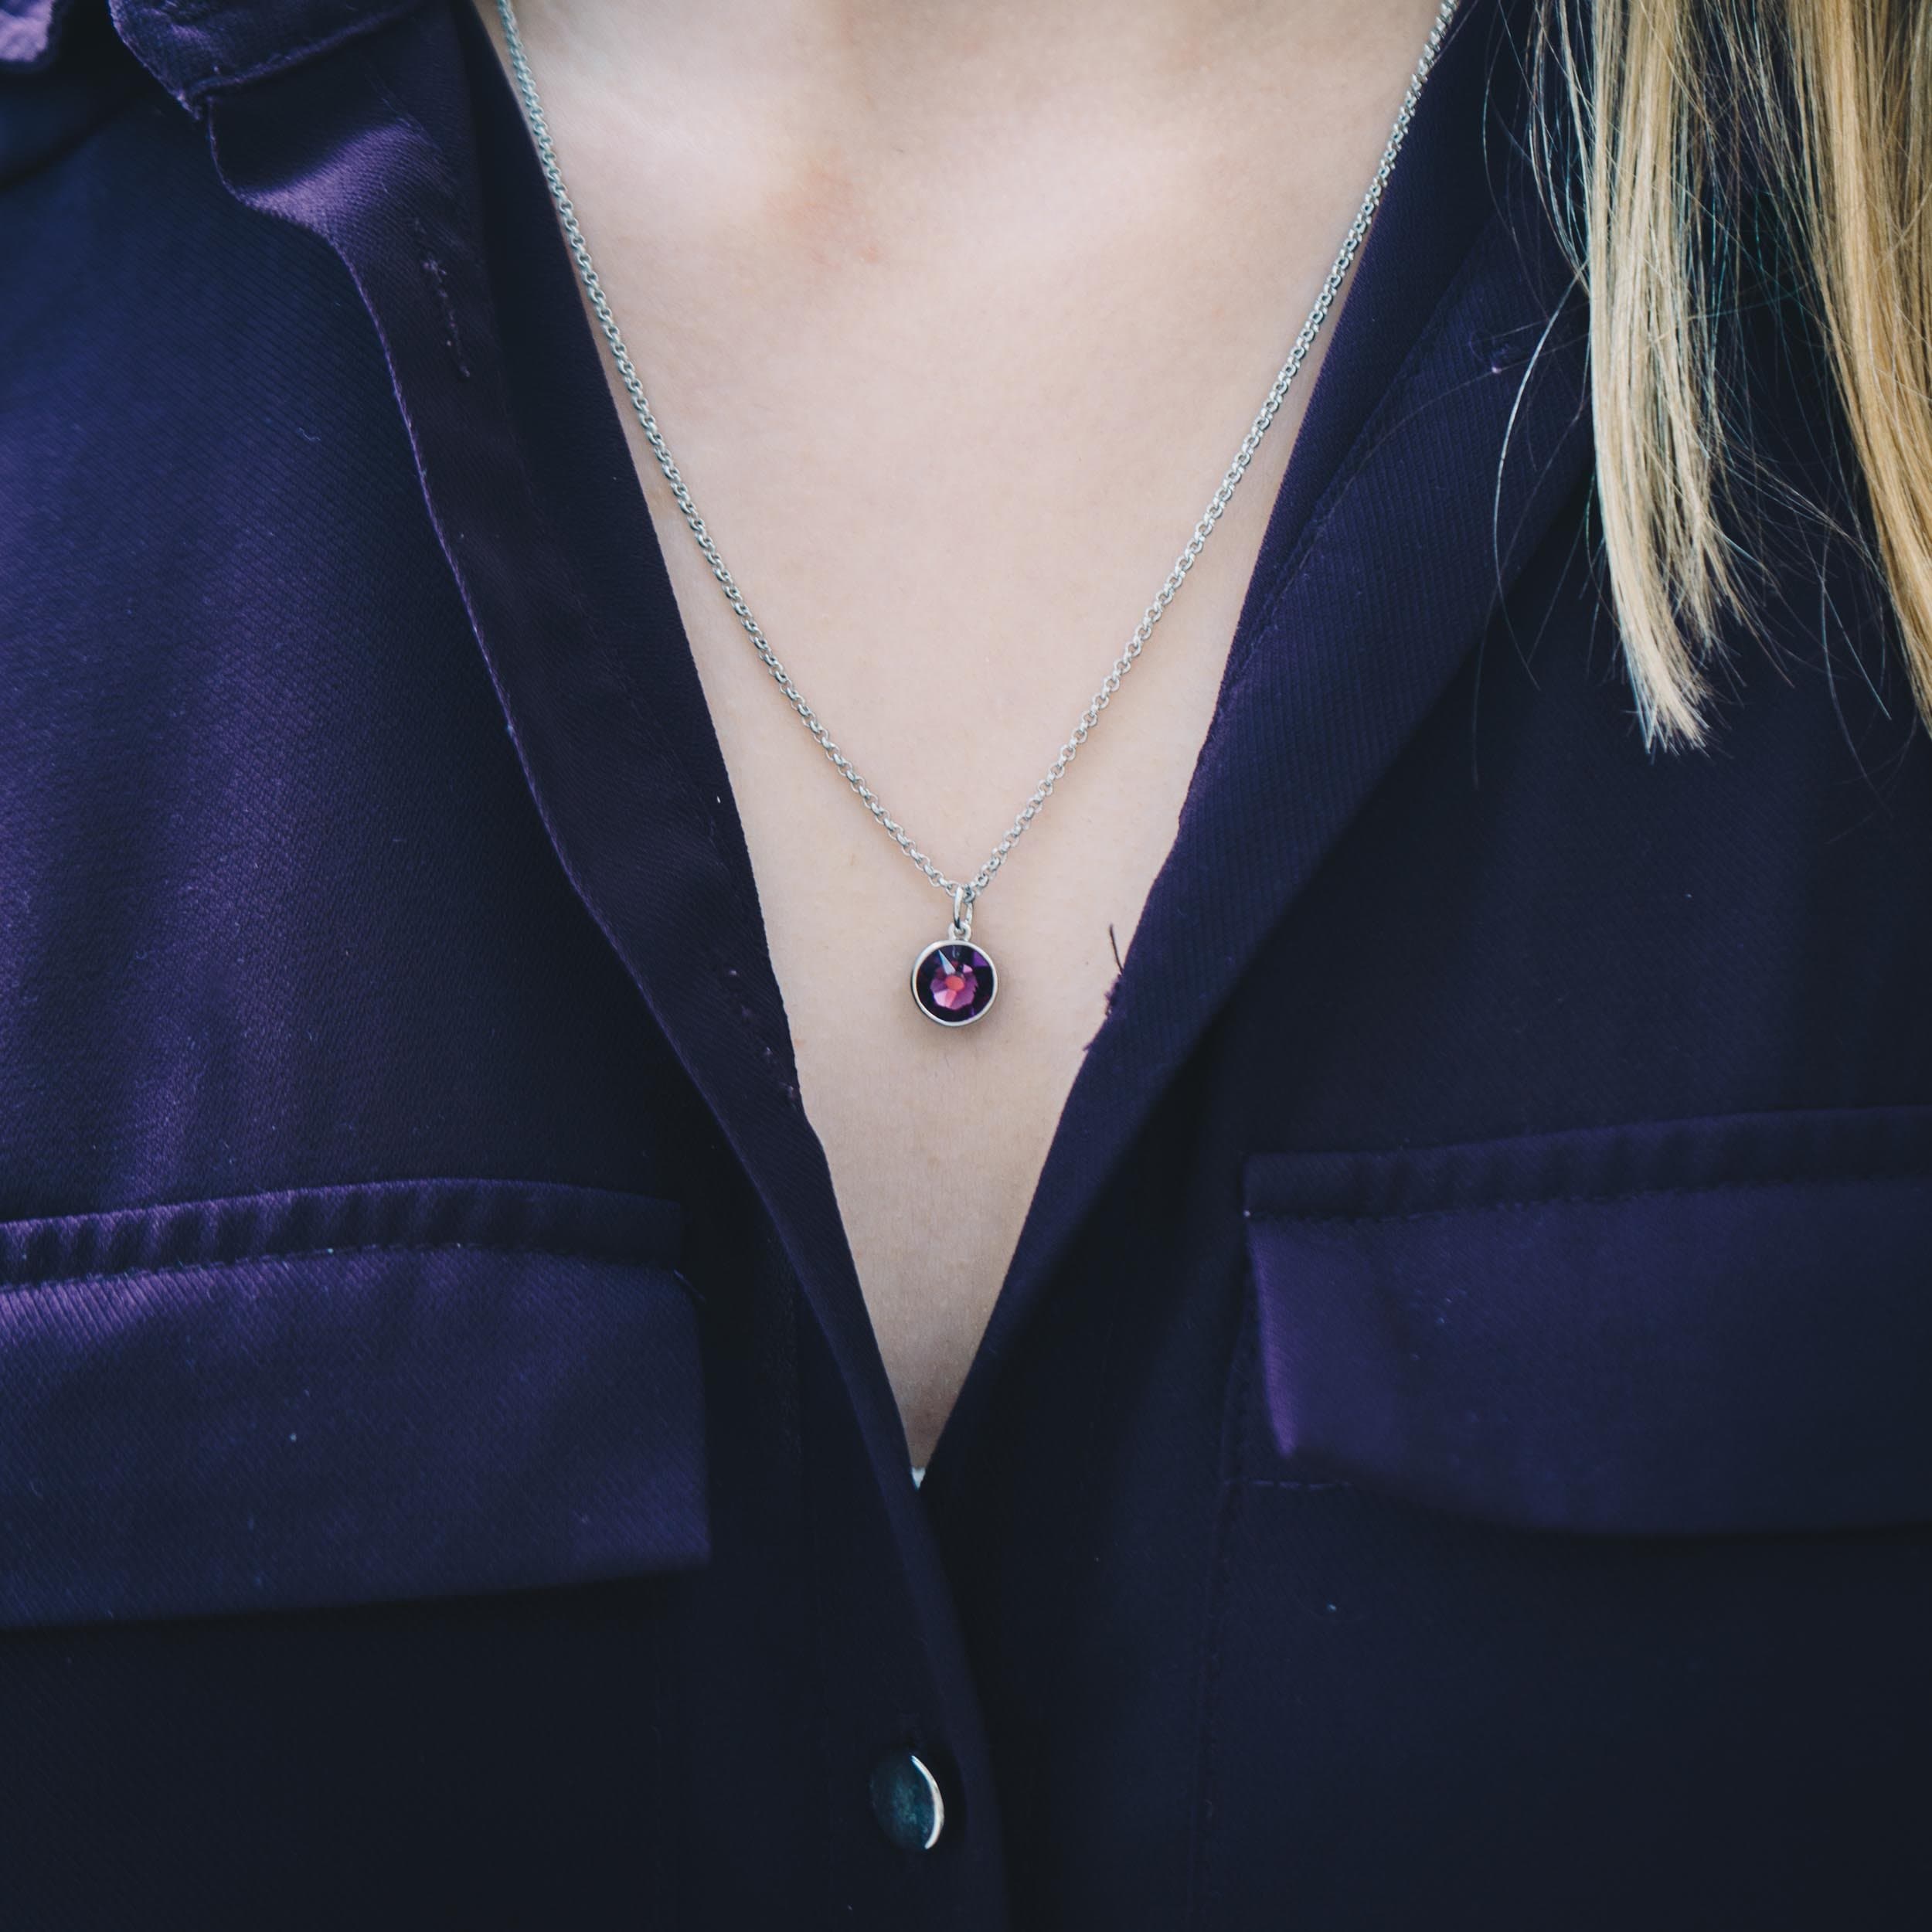 June (Alexandrite) Birthstone Necklace Created with Zircondia® Crystals